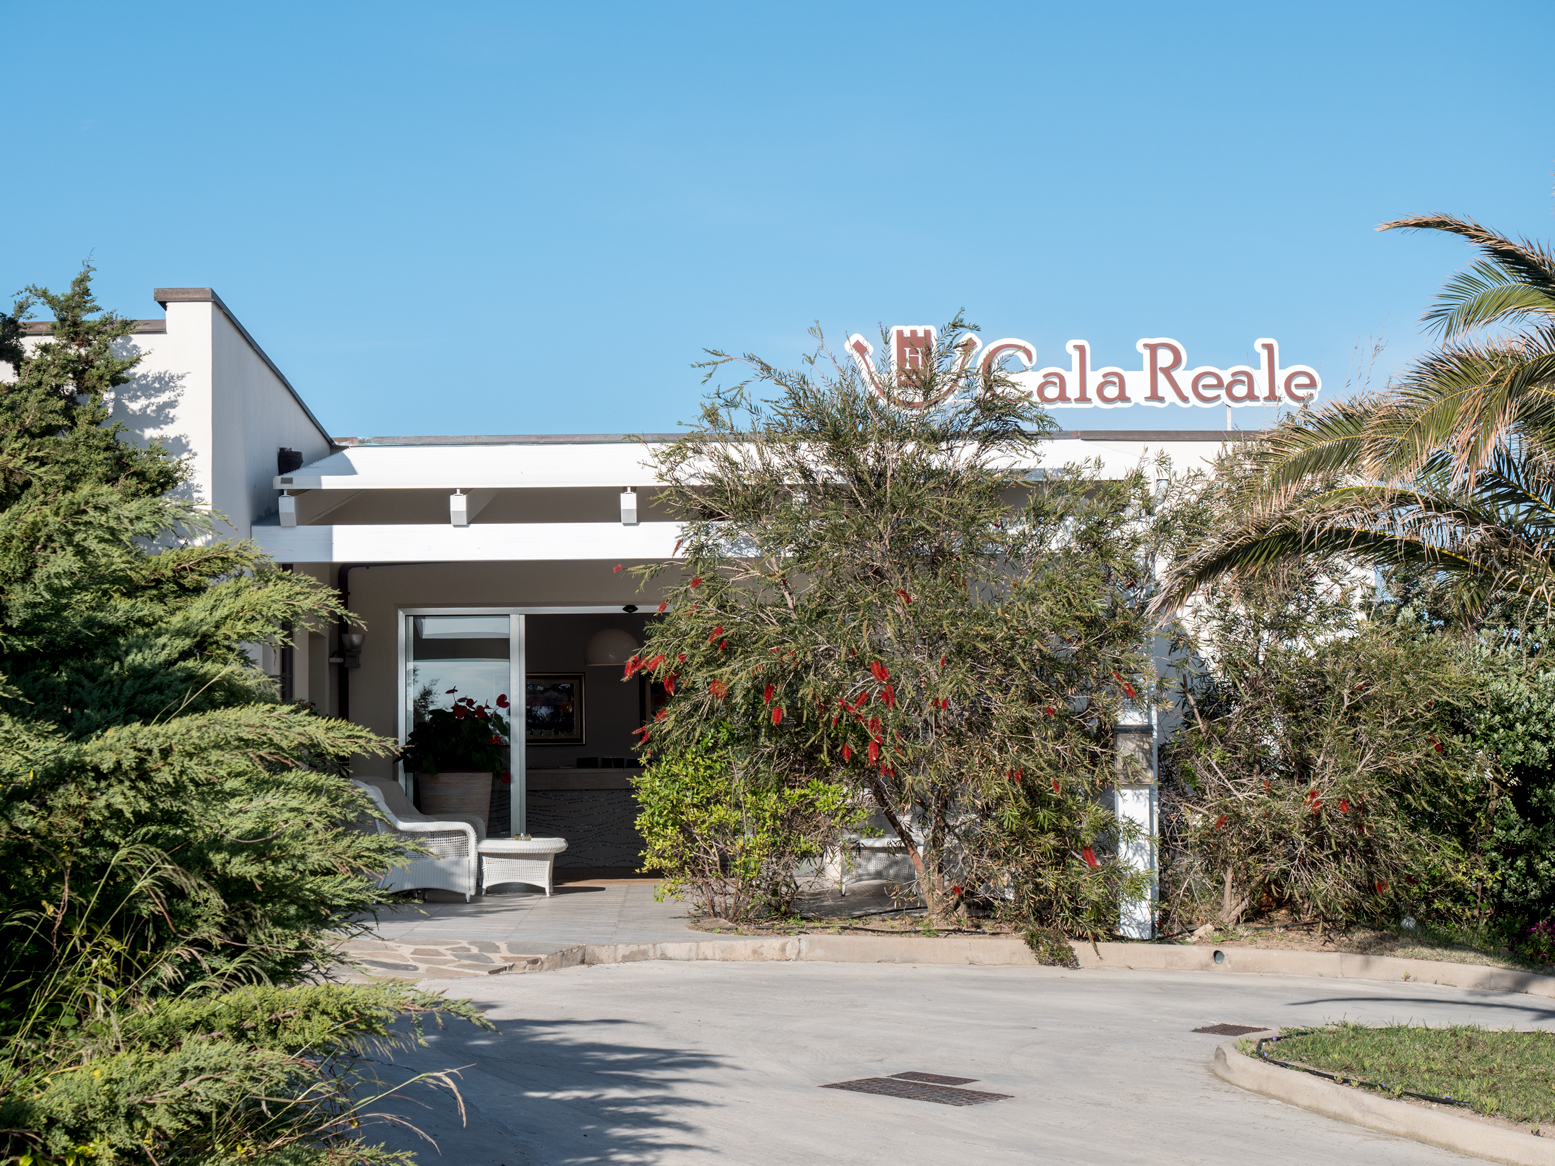 Hotel Cala Reale